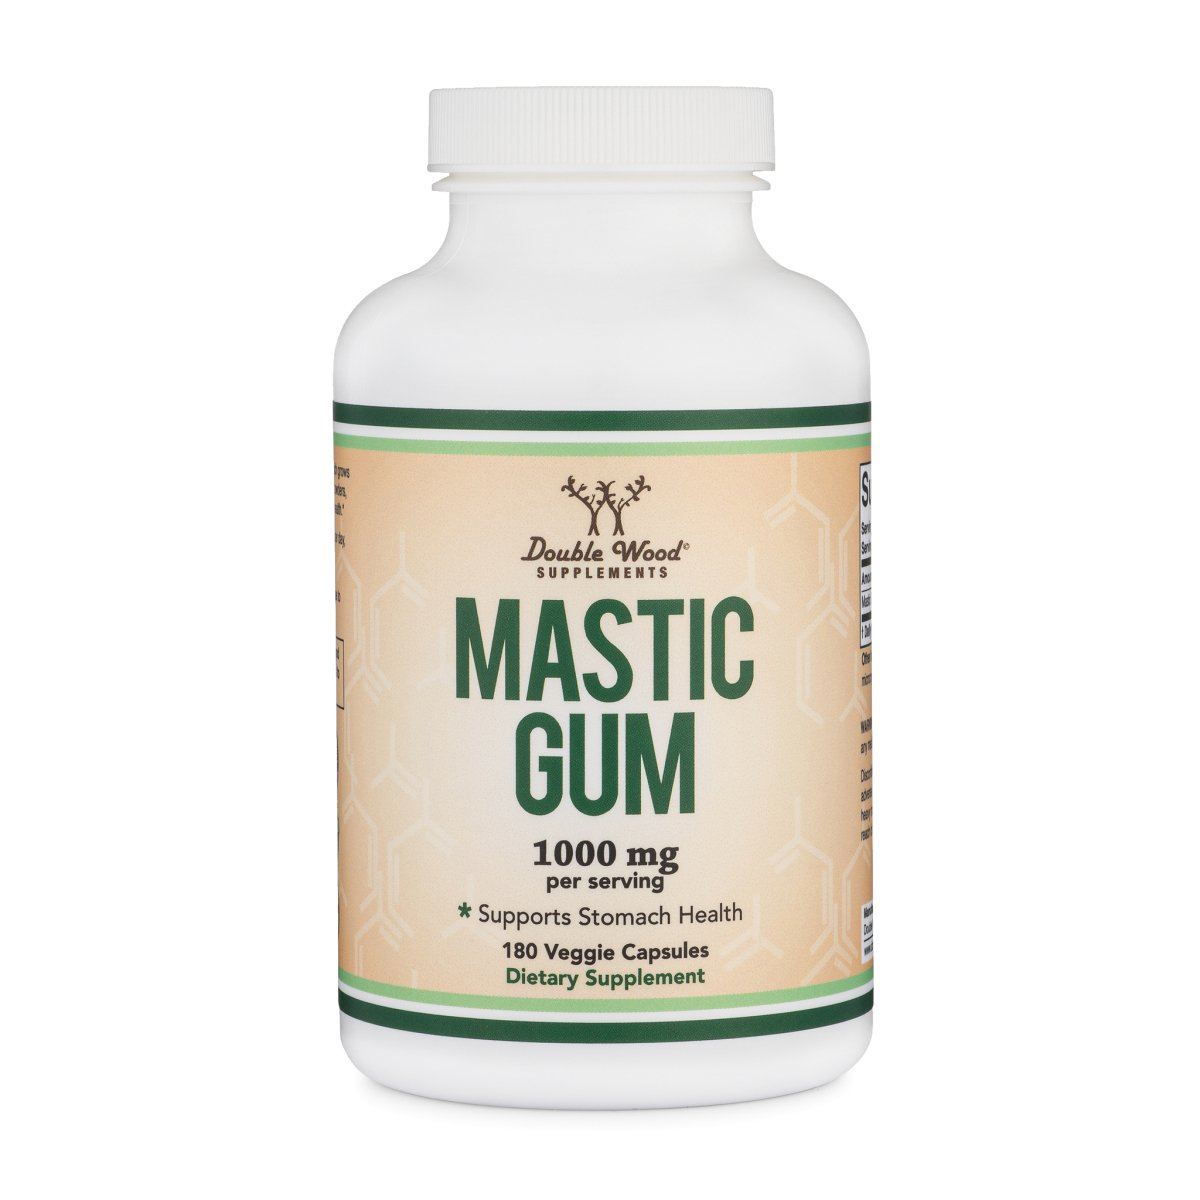 Mastic Gum Double Pack - Double Wood Supplements